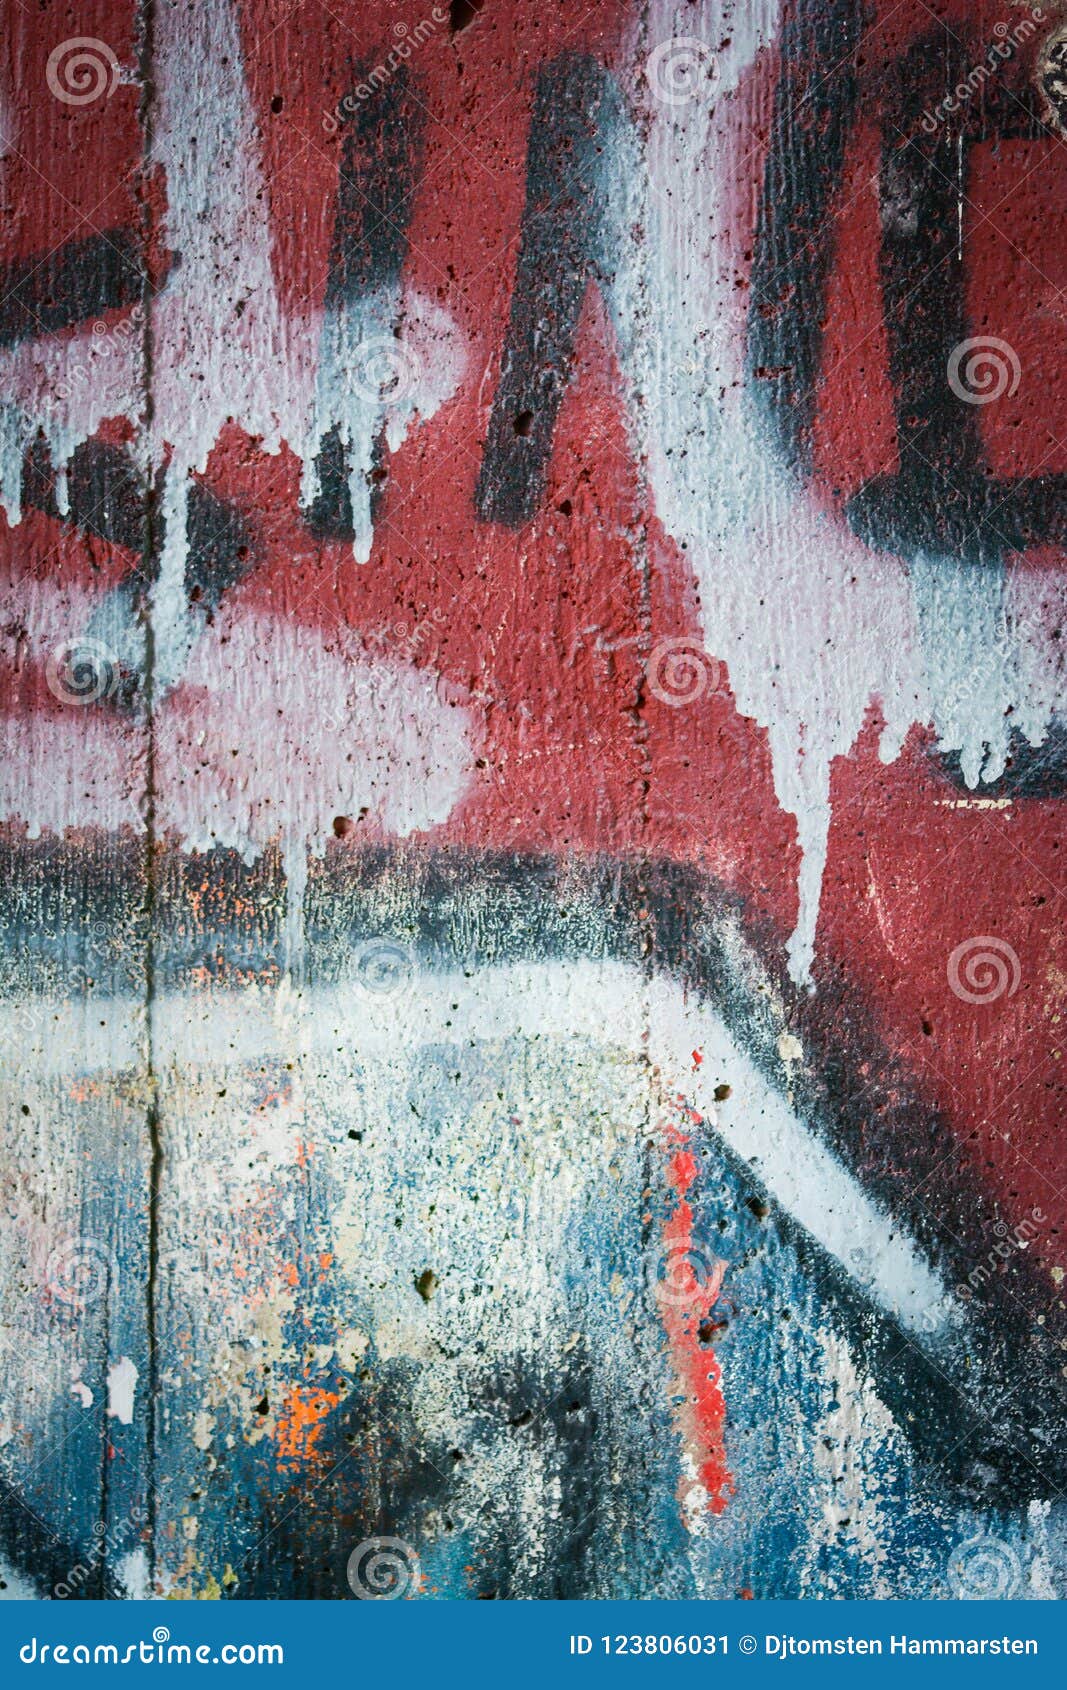 grafiti background on the concrete wall